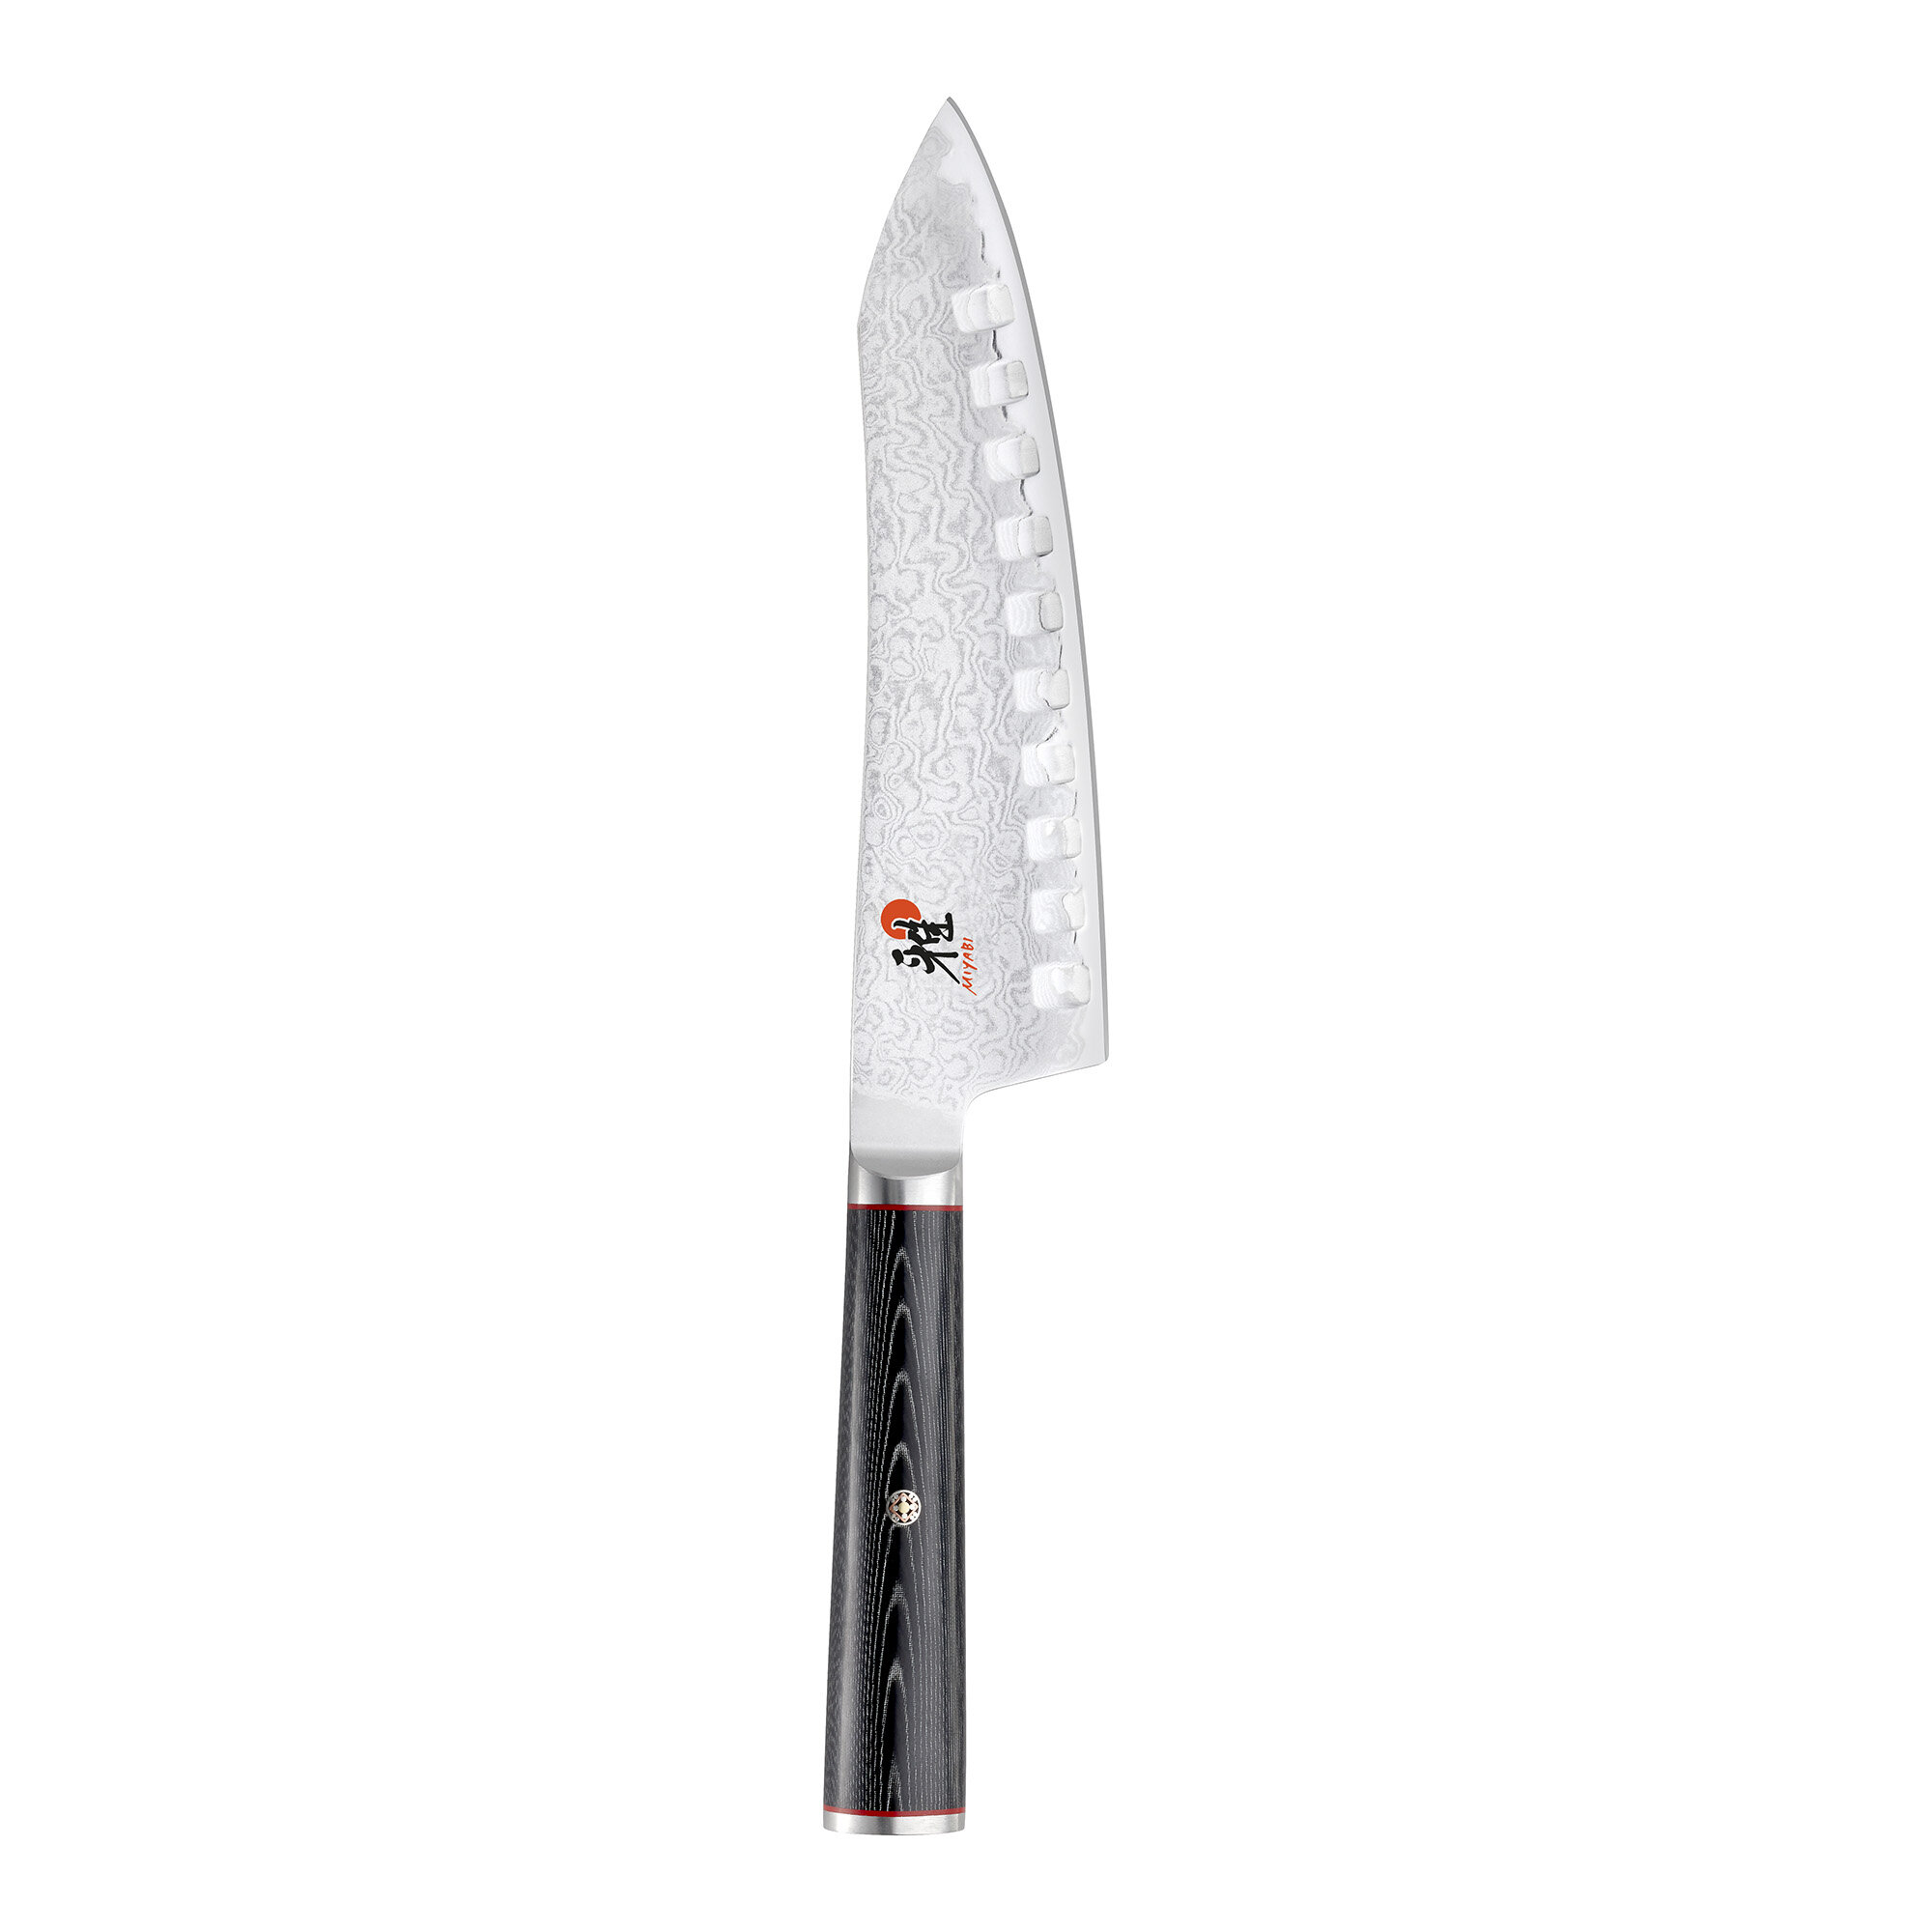 Sasaki Takumi Japanese AUS-10 Stainless Steel Chef Knife with Locking  Sheath, 8-Inch, Black